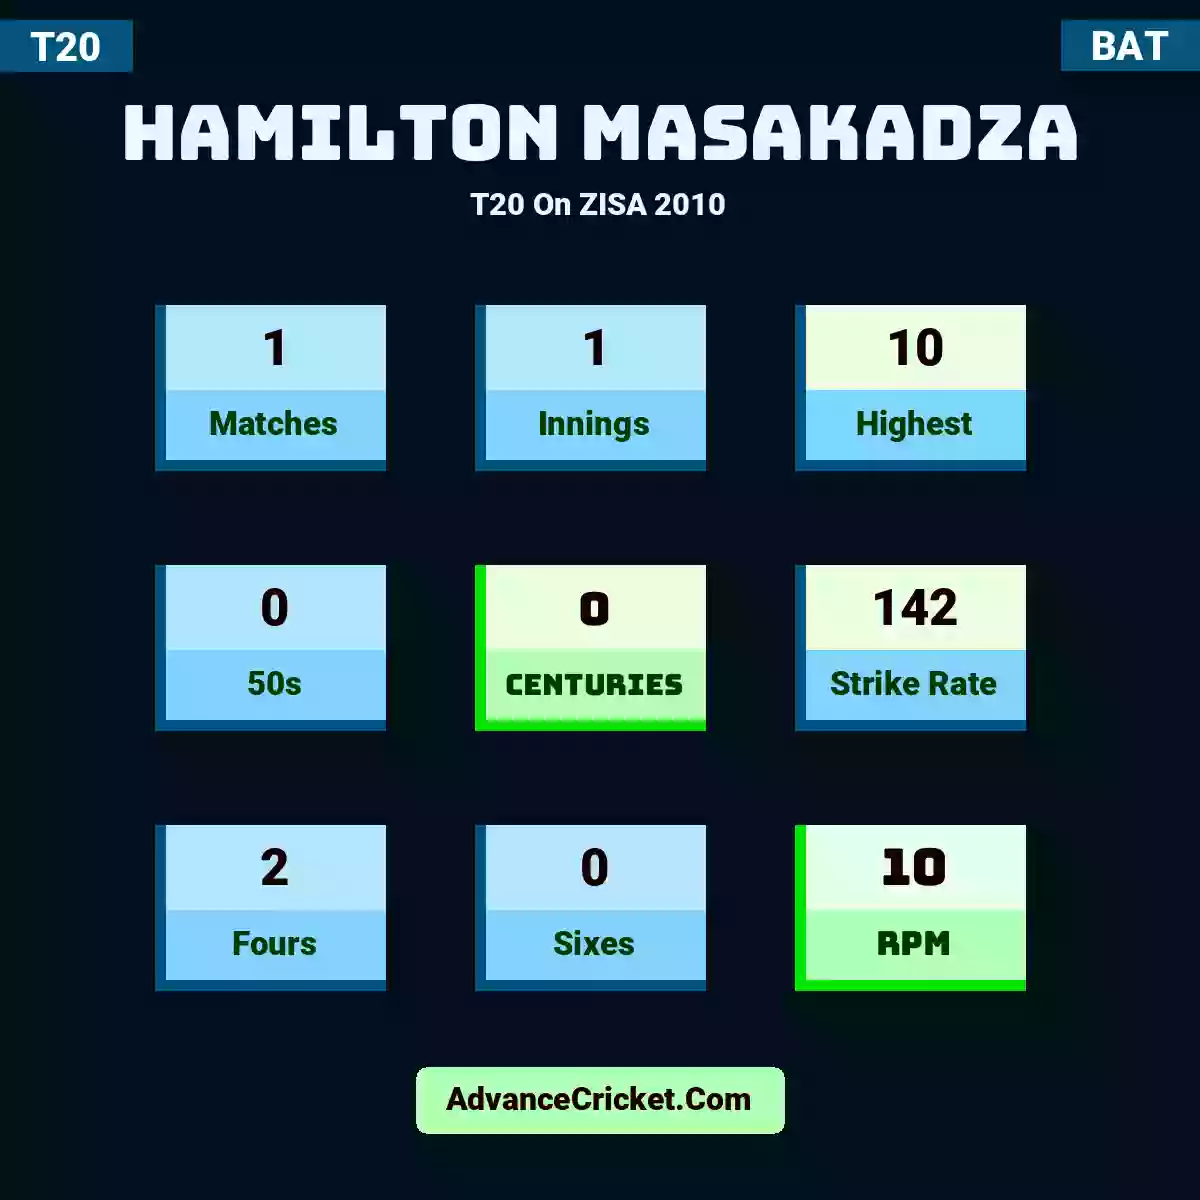 Hamilton Masakadza T20  On ZISA 2010, Hamilton Masakadza played 1 matches, scored 10 runs as highest, 0 half-centuries, and 0 centuries, with a strike rate of 142. H.Masakadza hit 2 fours and 0 sixes, with an RPM of 10.